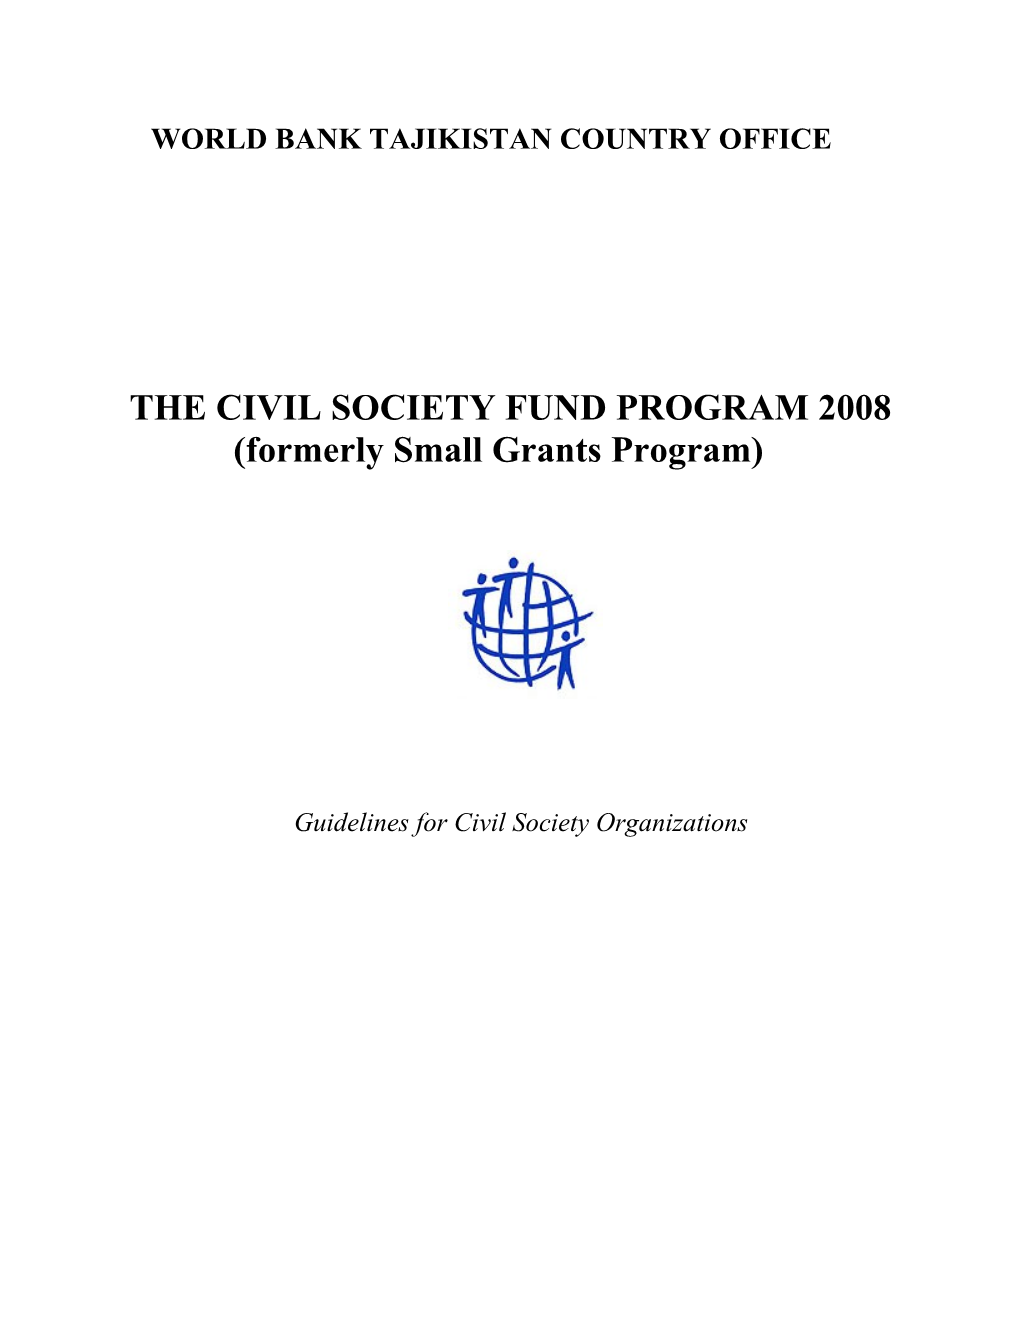 The Small Grants Program